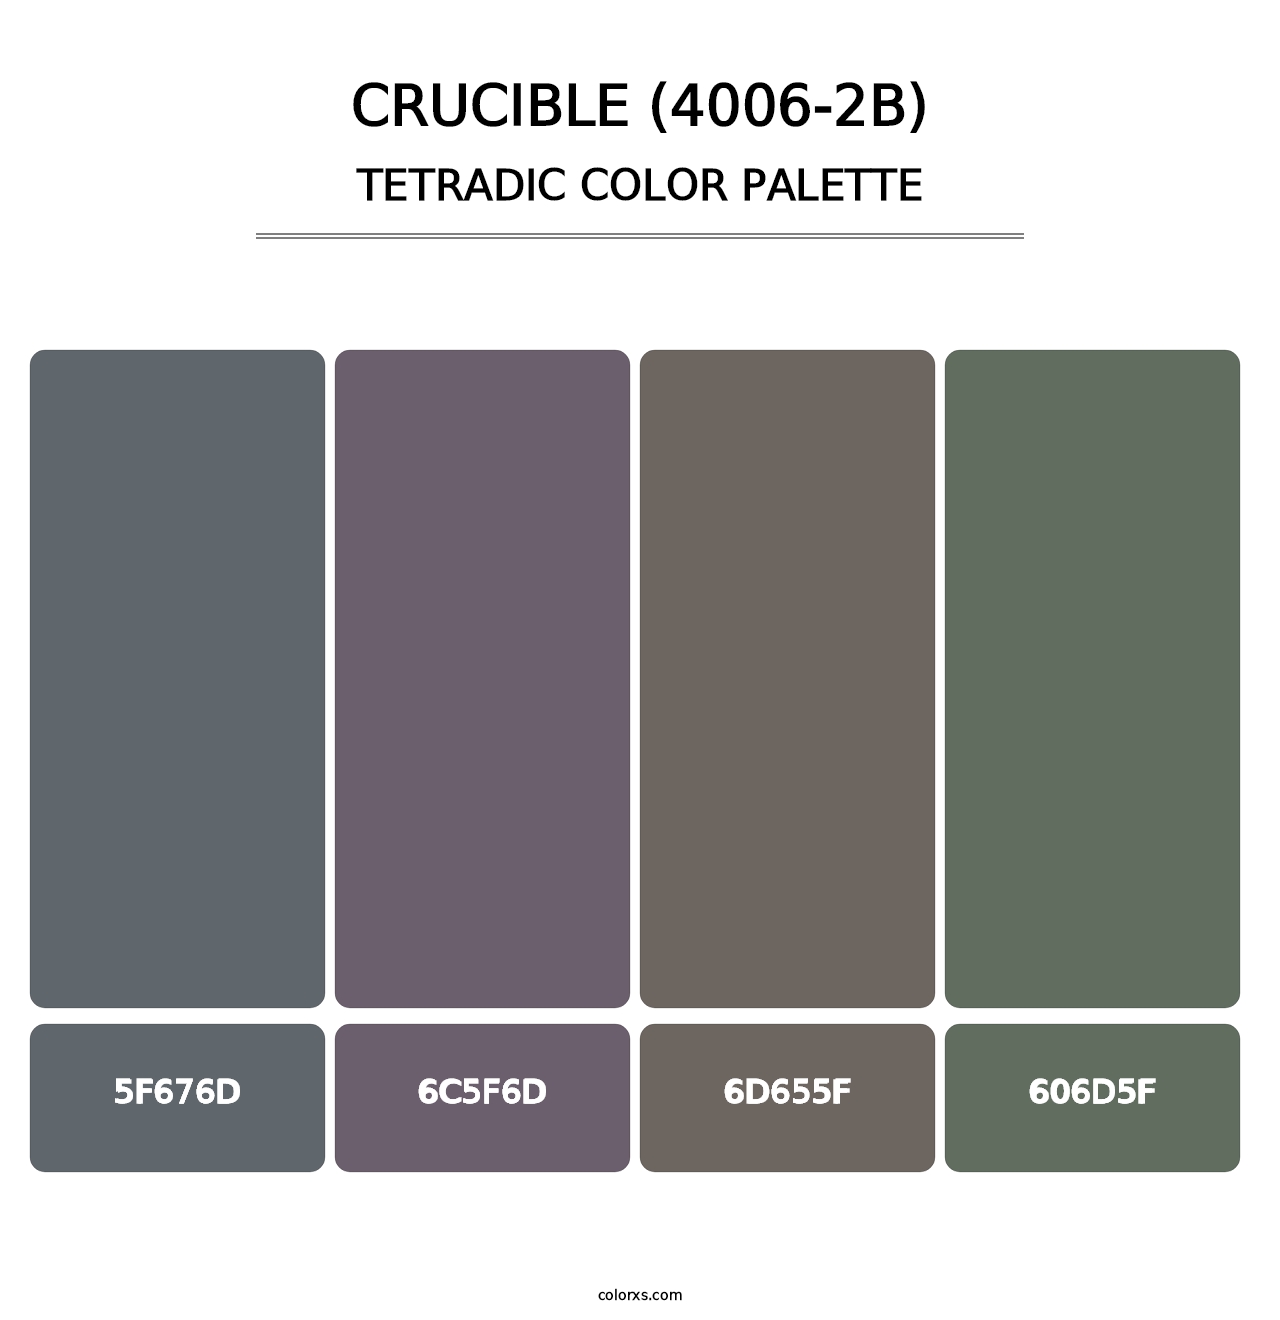 Crucible (4006-2B) - Tetradic Color Palette